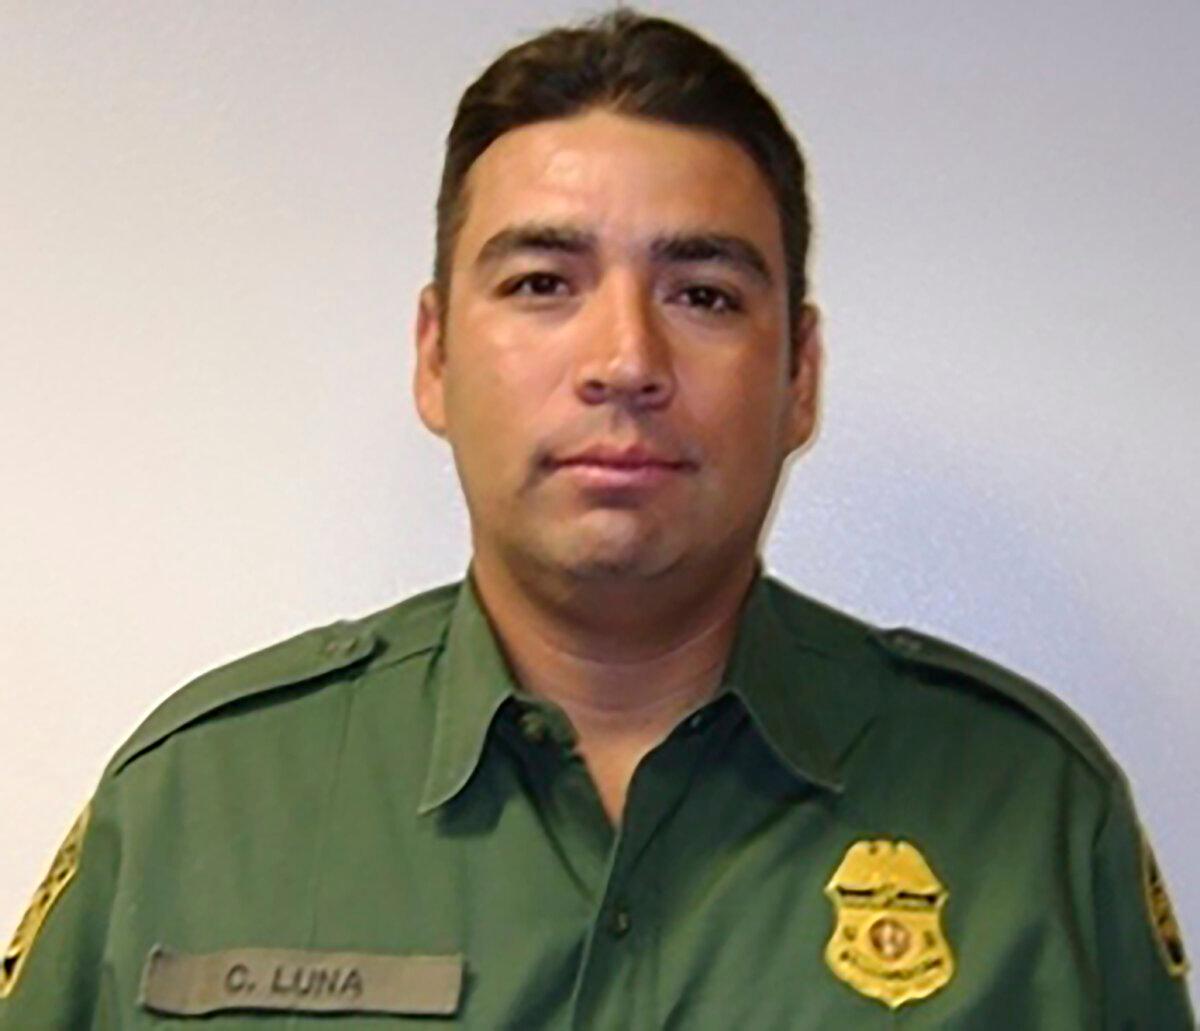 Border Patrol Agent Chris Luna. (U.S. Customs and Border Protection via AP)